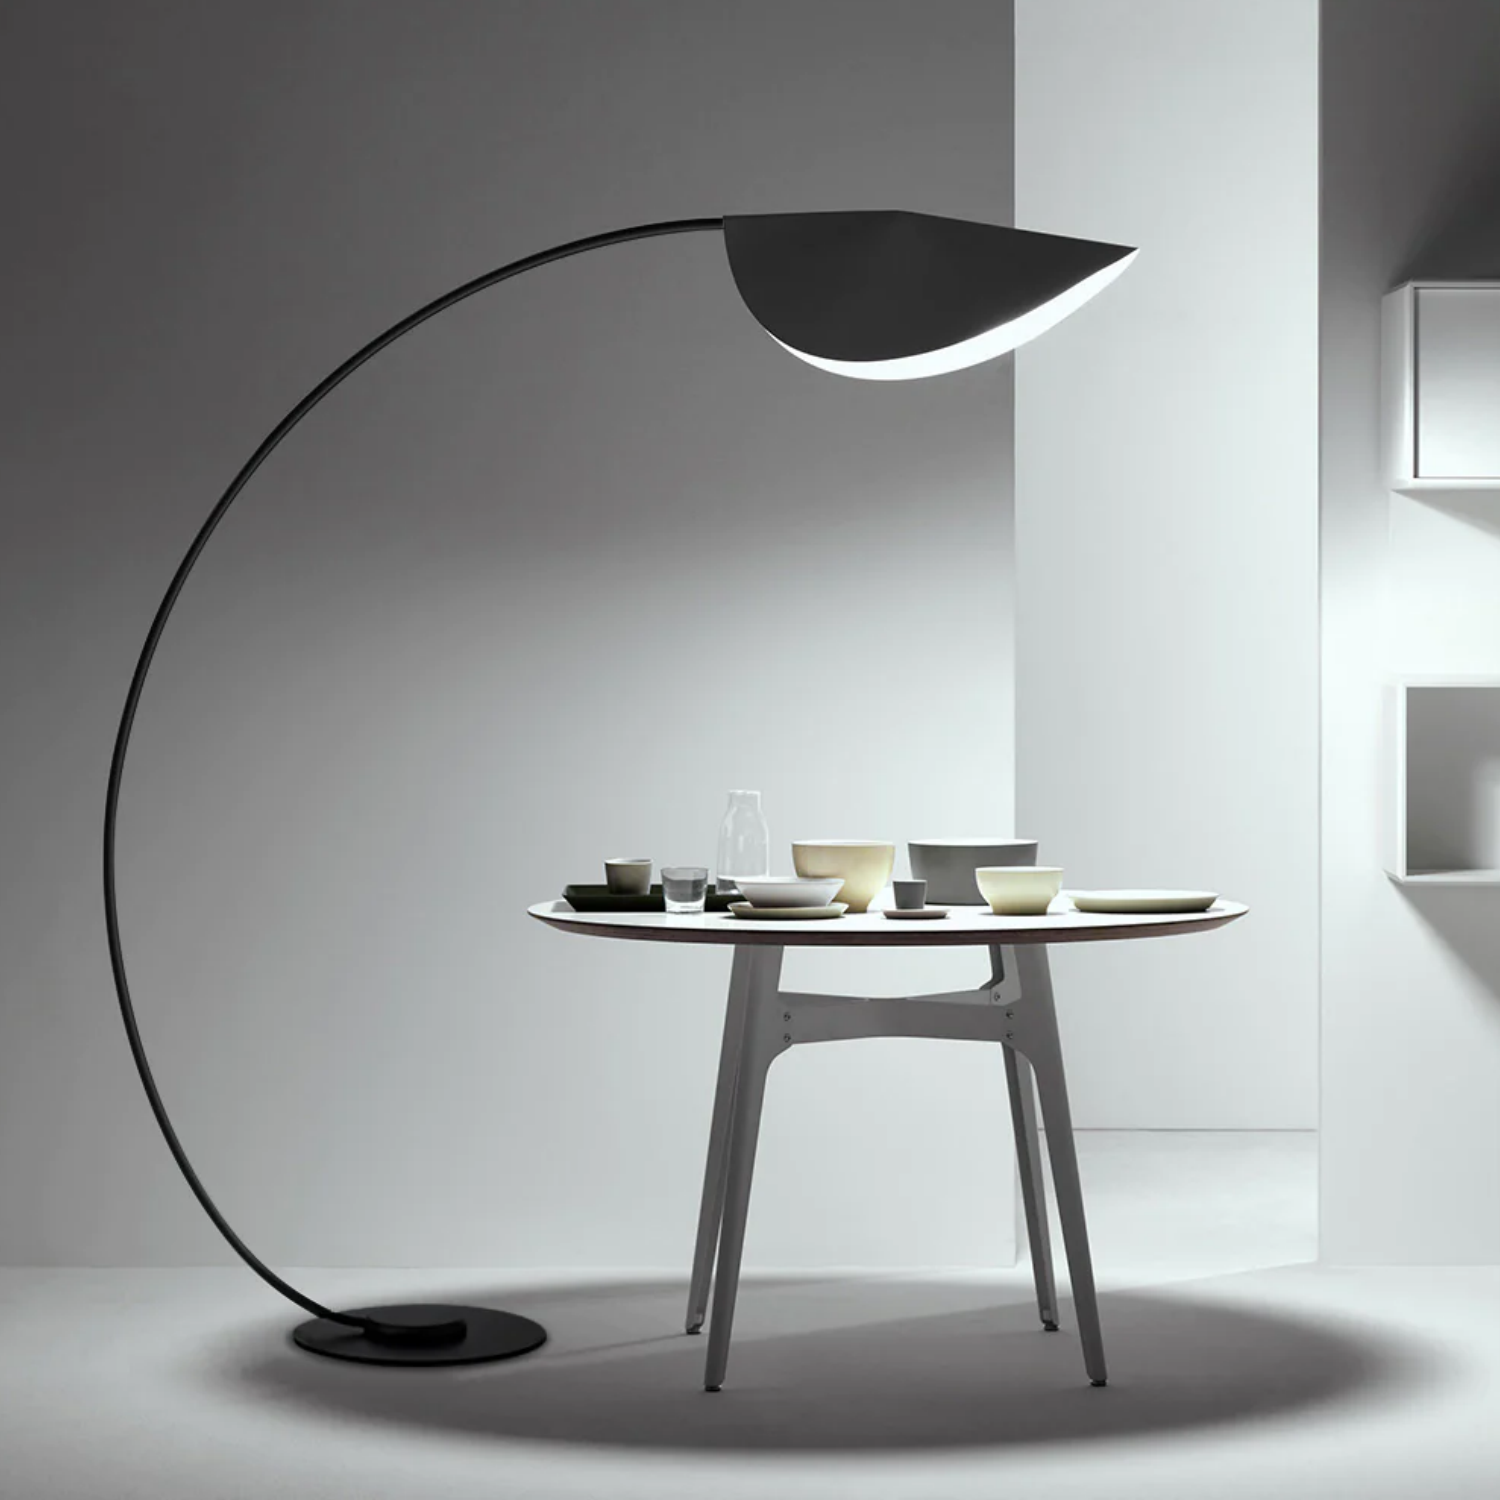 Decorative Lights Floor Lamp OL-FL057 Smart Home Life Interior